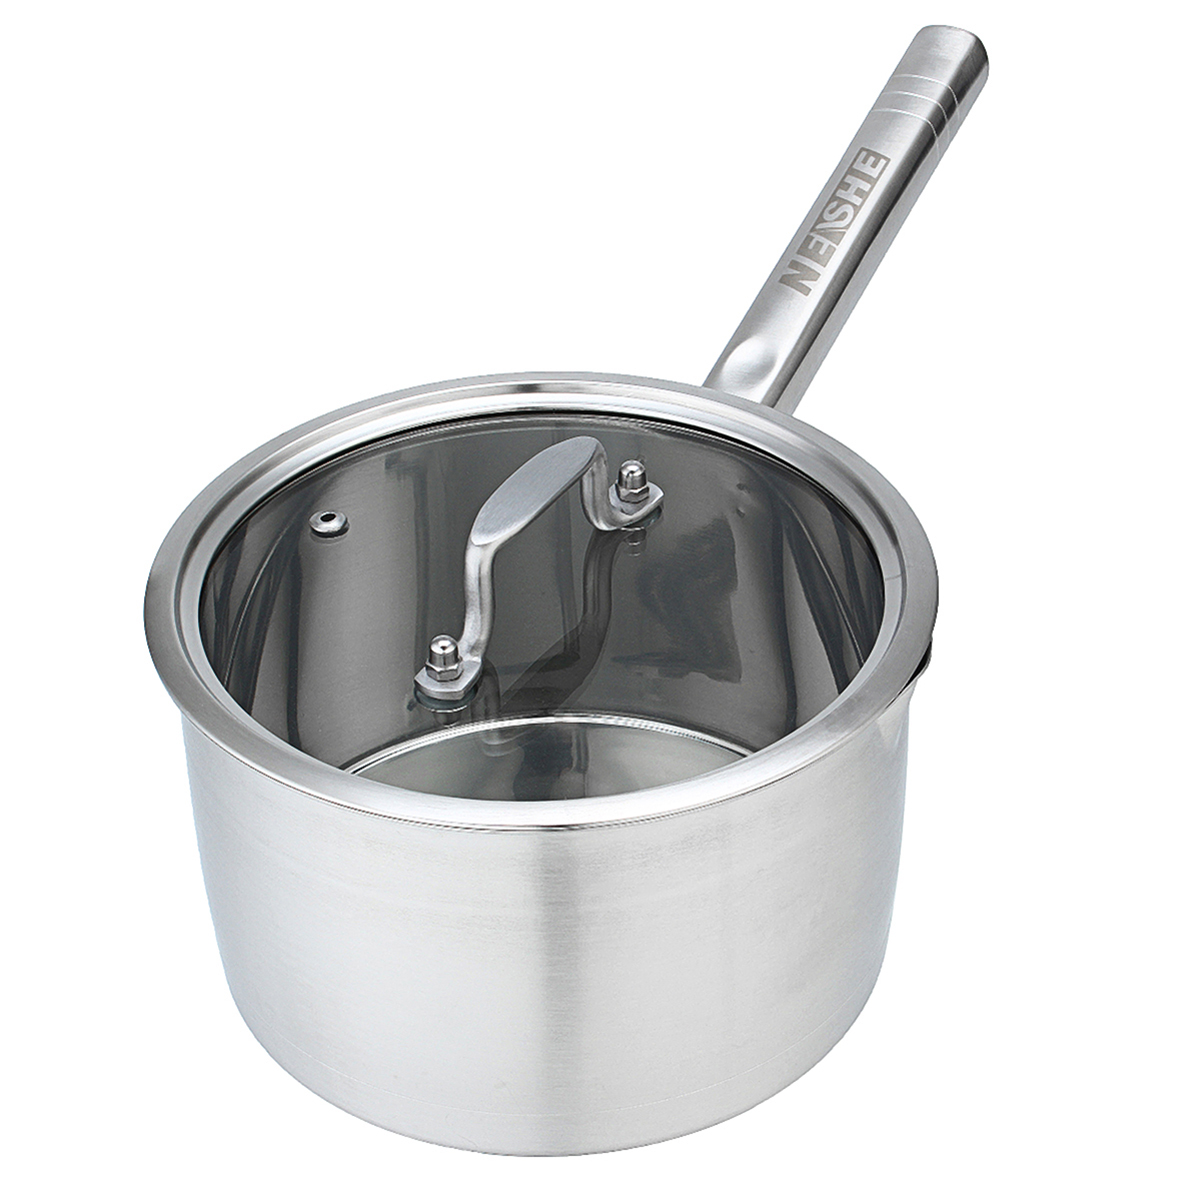 

18cm Saucepan with Lid Stainless Steel Induction Cookware Stockpot Milk Soup Pan Milk Pot